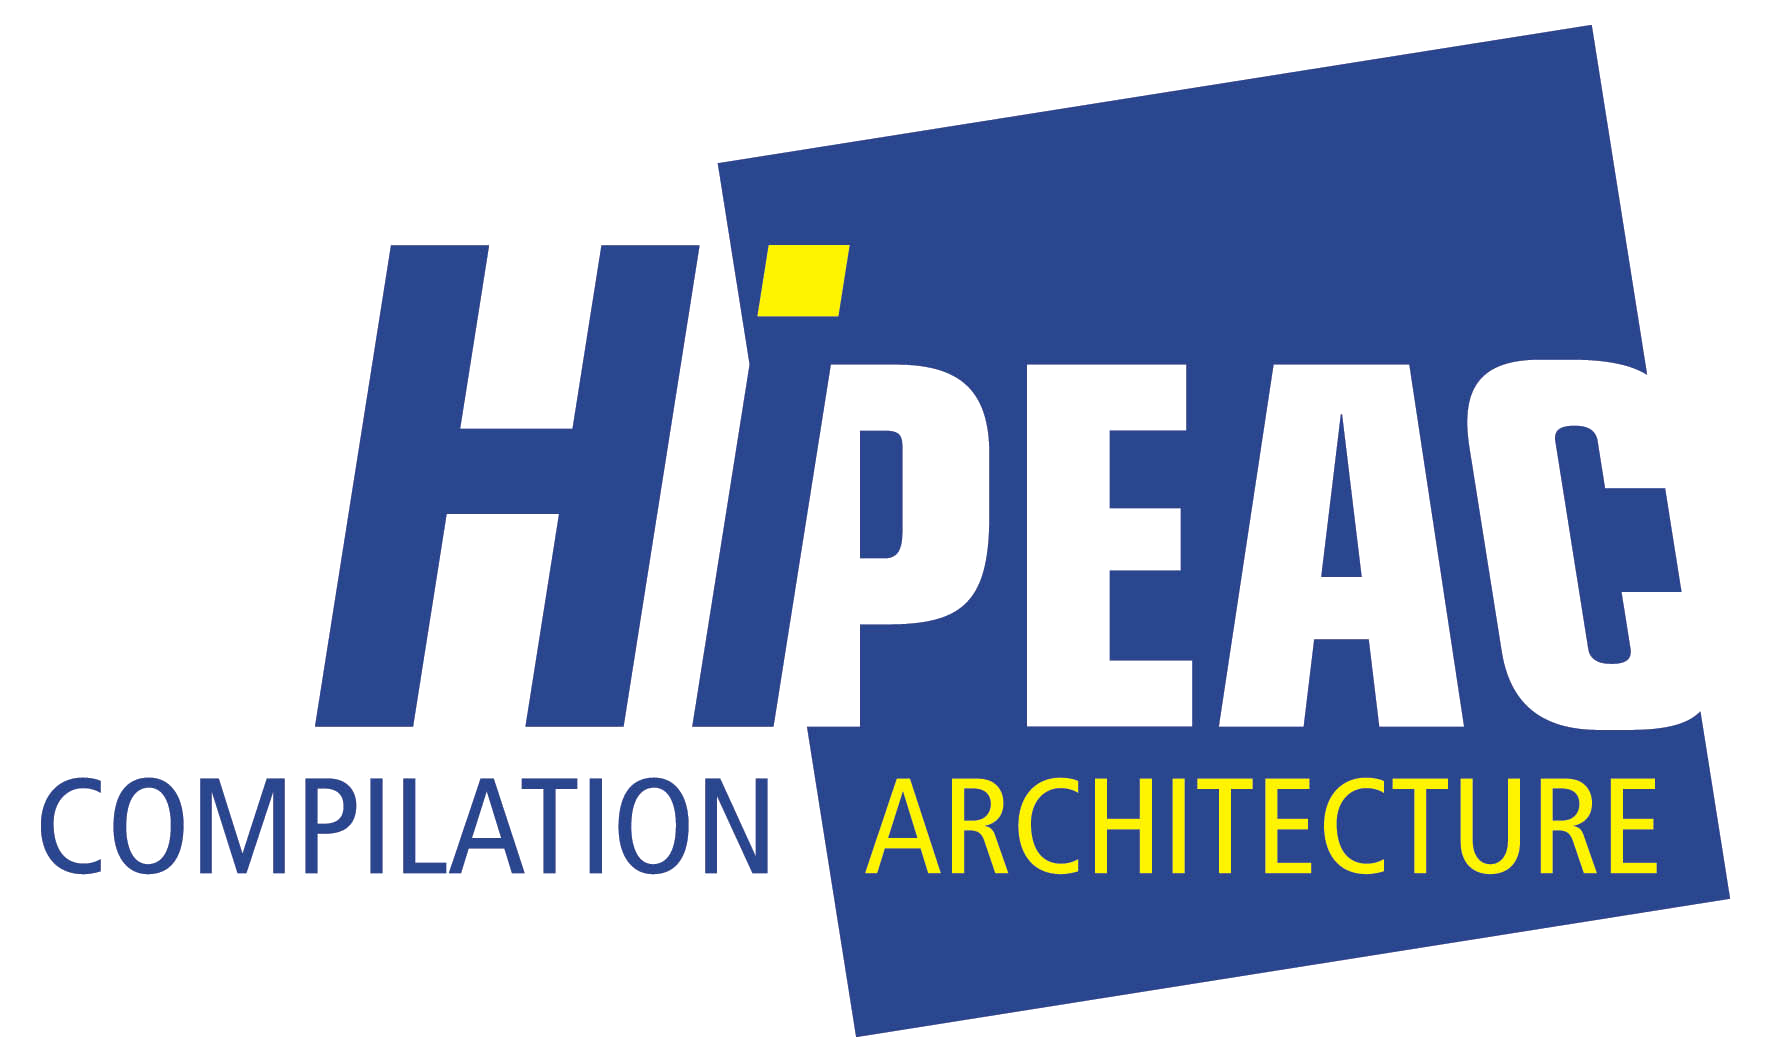 HiPEAC 2017